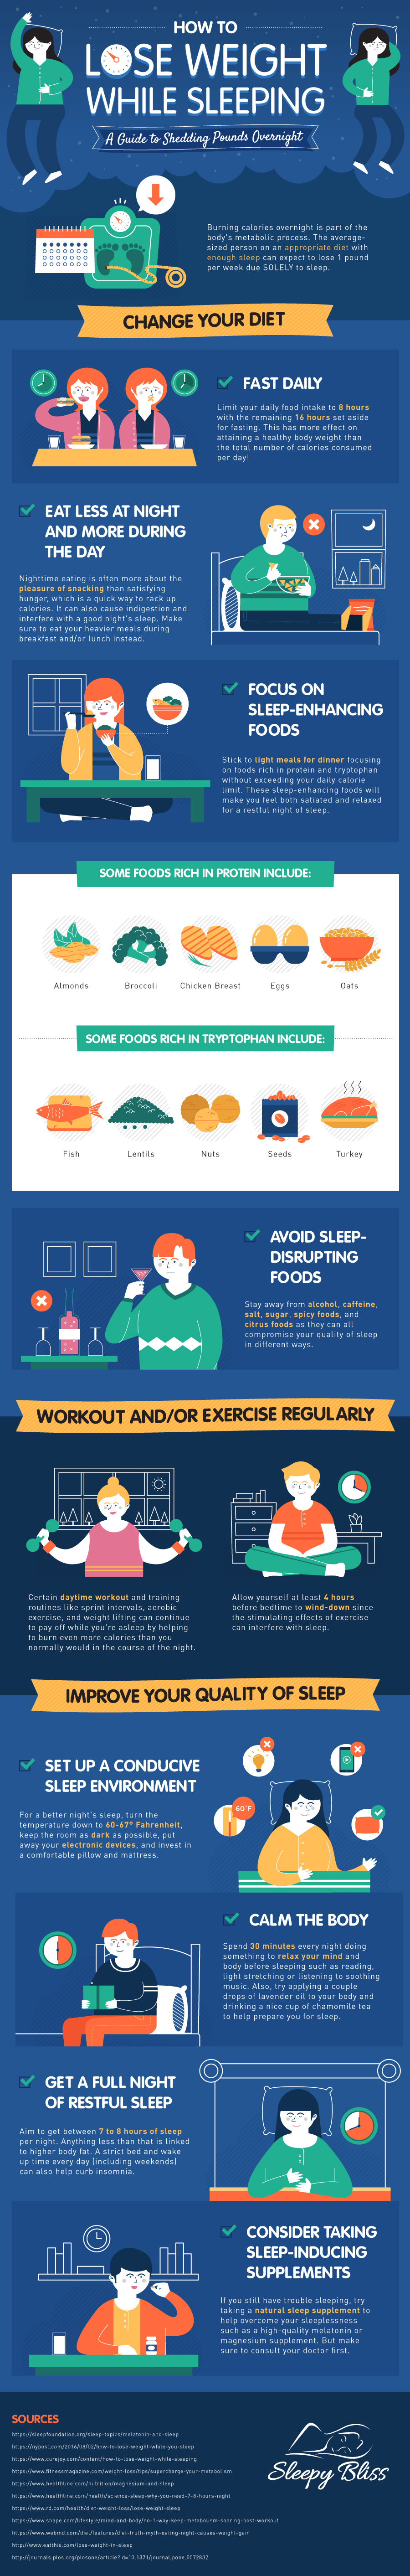 Sleep yourself SKINNY! 7 daily hacks to turbocharge weight loss overnight